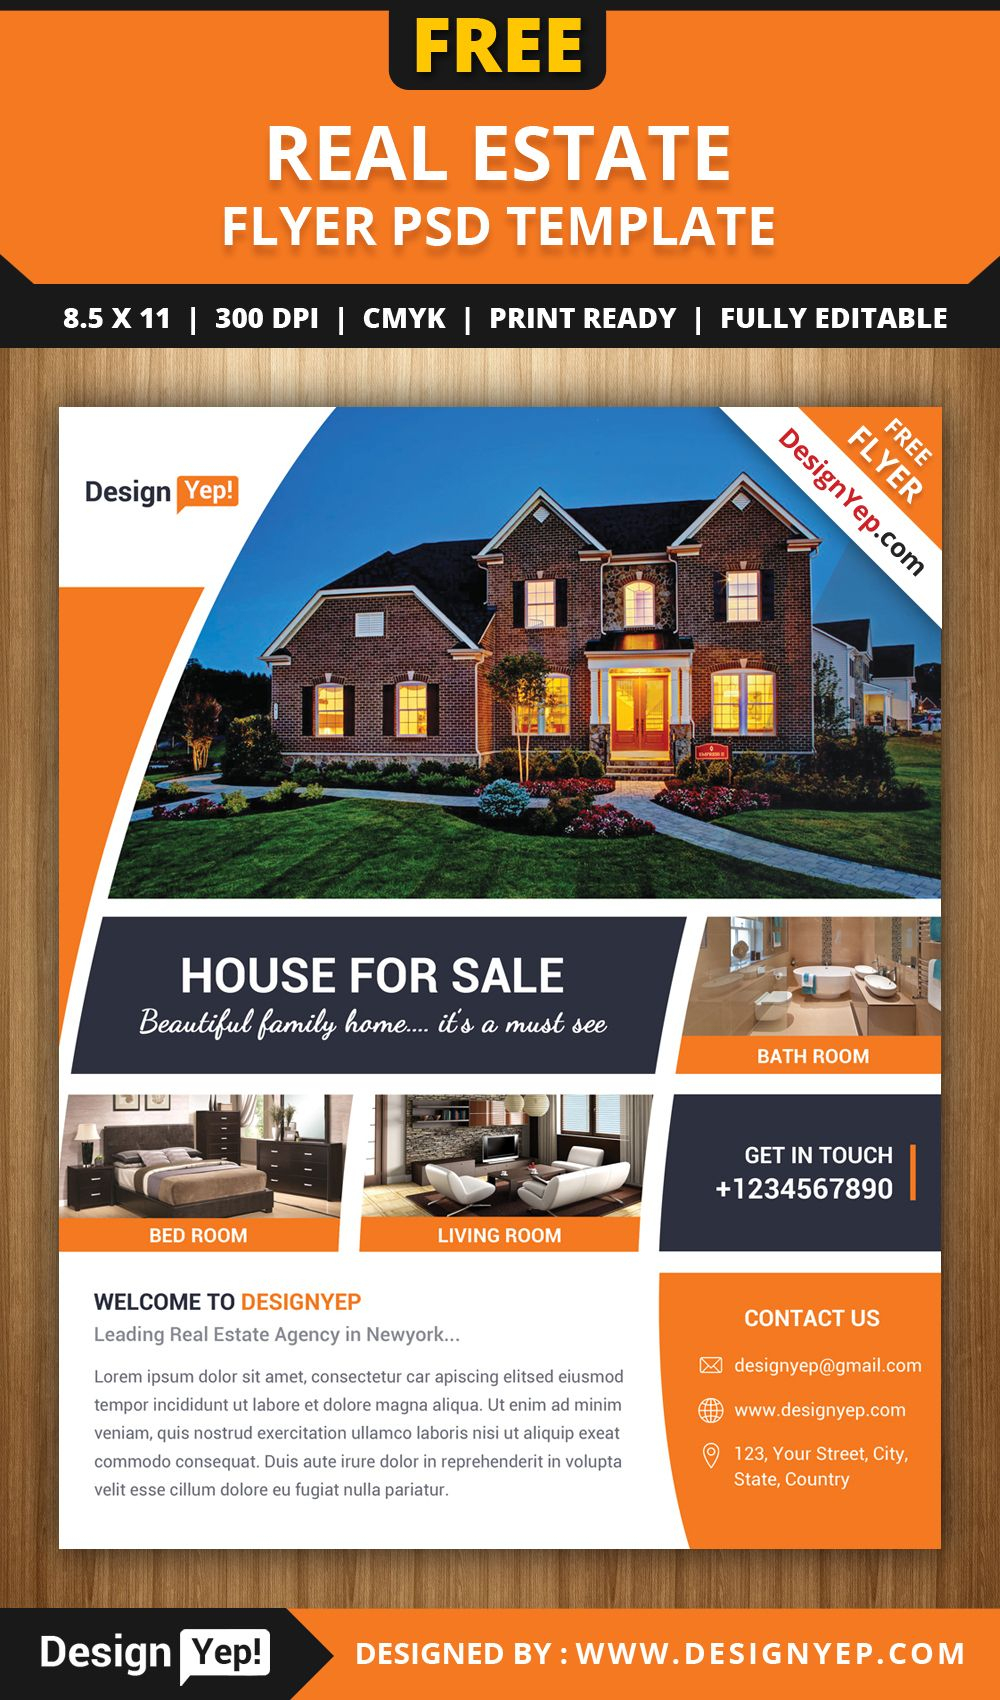 Free-Real-Estate-Flyer-Psd-Template-7861-Designyep | Free Flyers - Free Printable Real Estate Flyer Templates